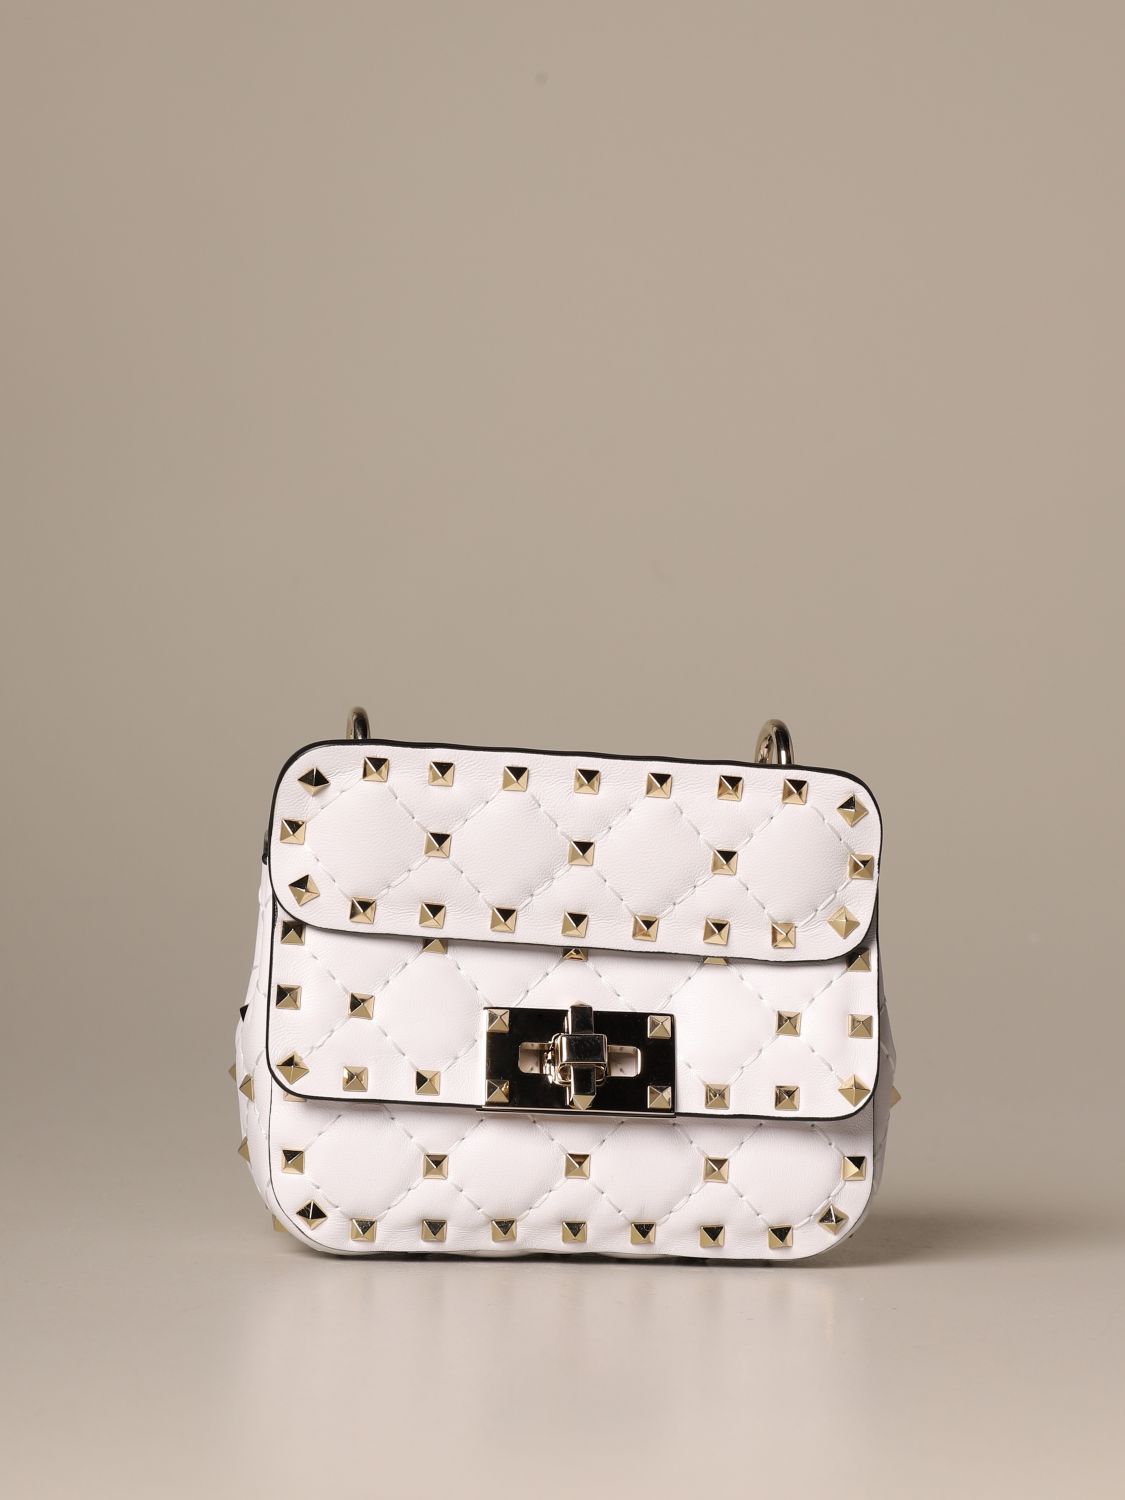 Top 62+ valentino white bag latest - in.cdgdbentre